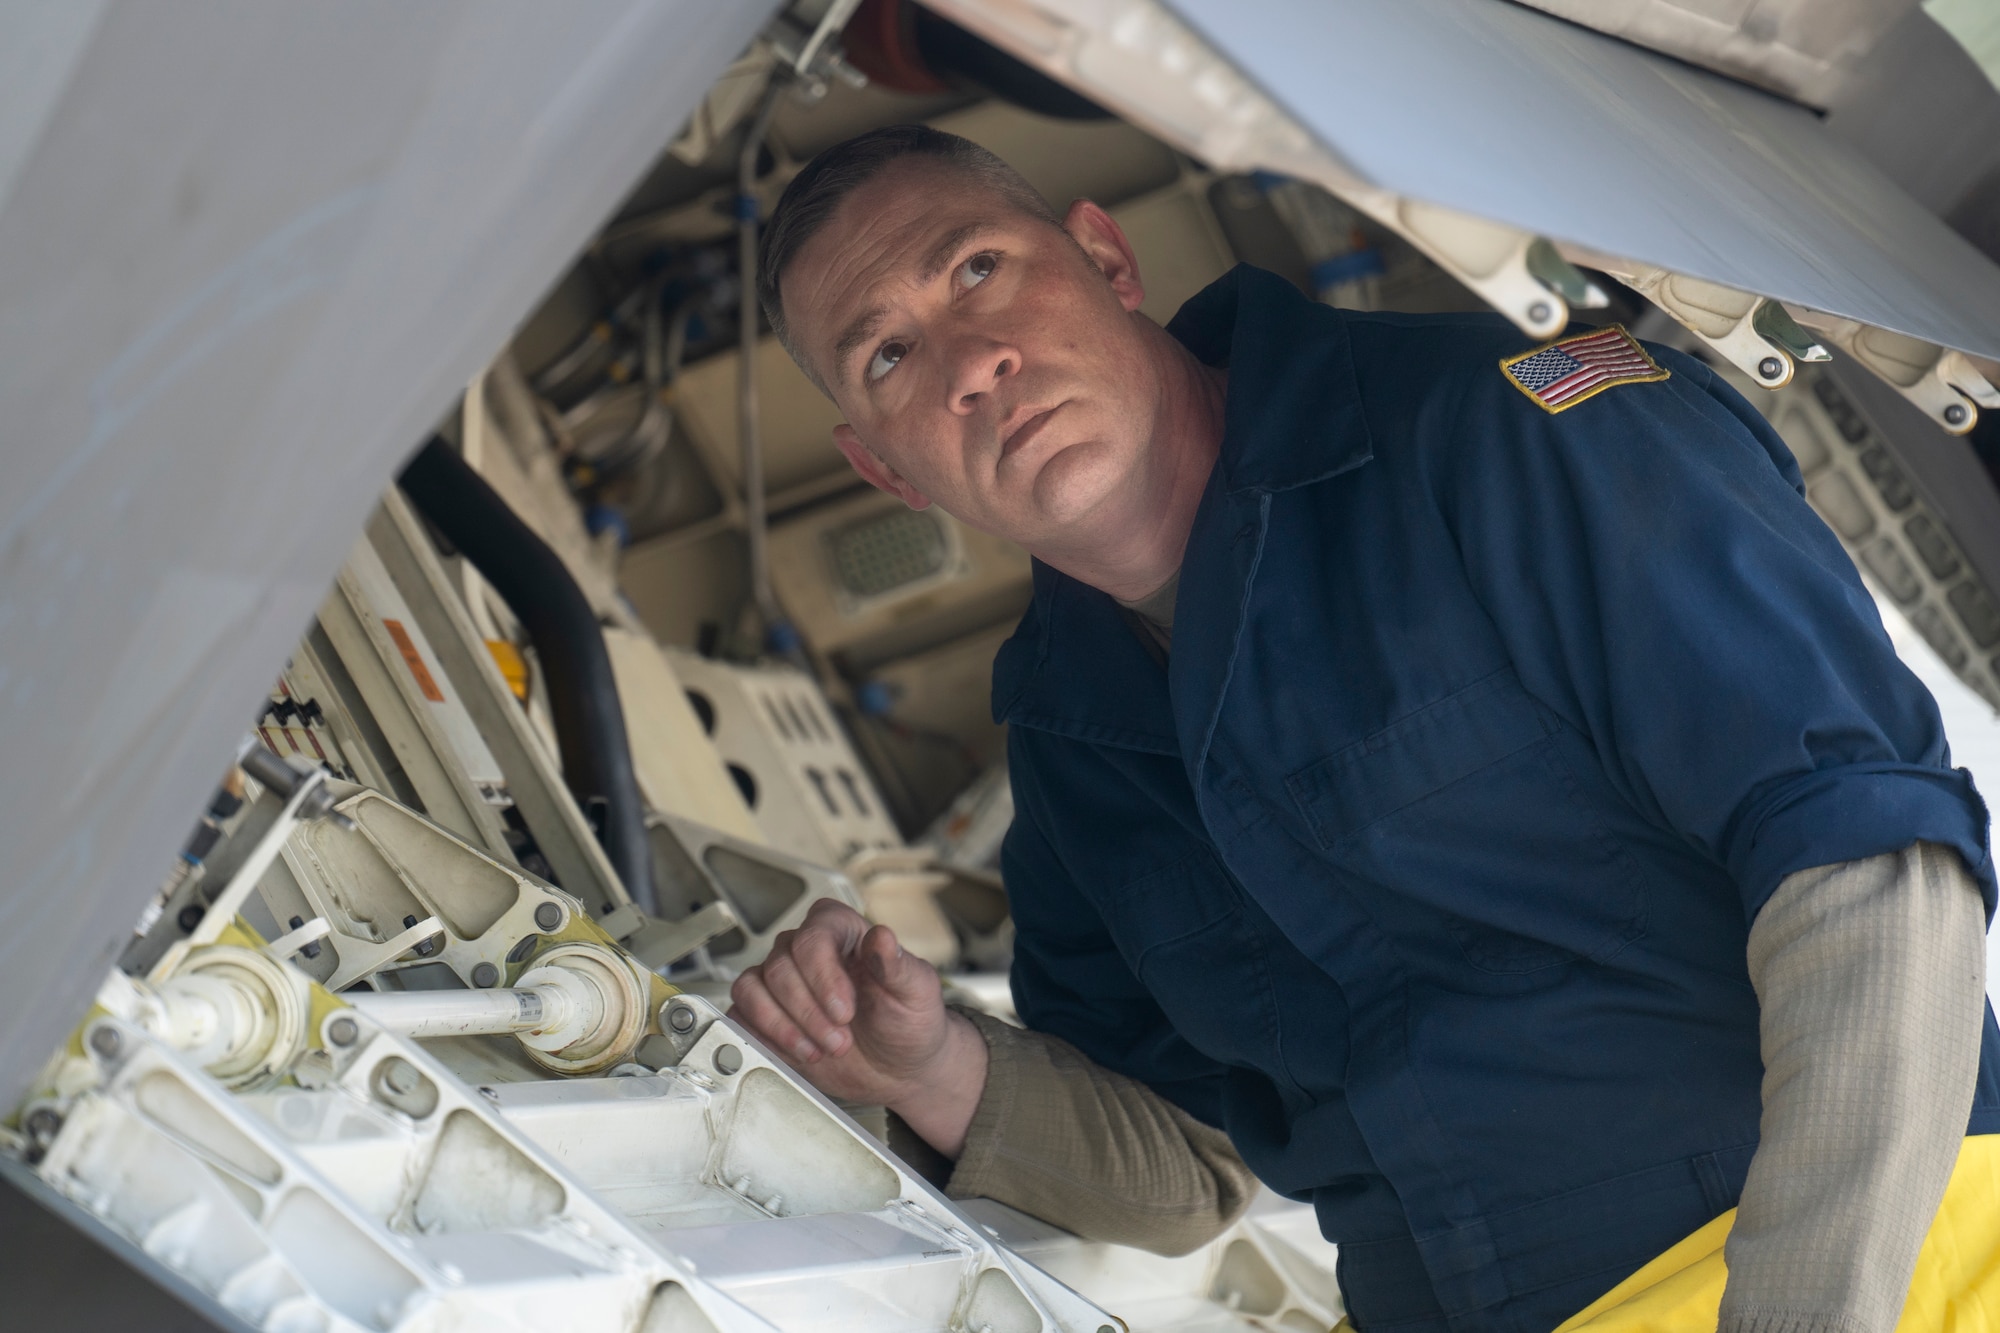 U.S. Air Force Master Sgt. Joshua Eller looks inside a panel on the side of an F-22 Raptor fighter jet